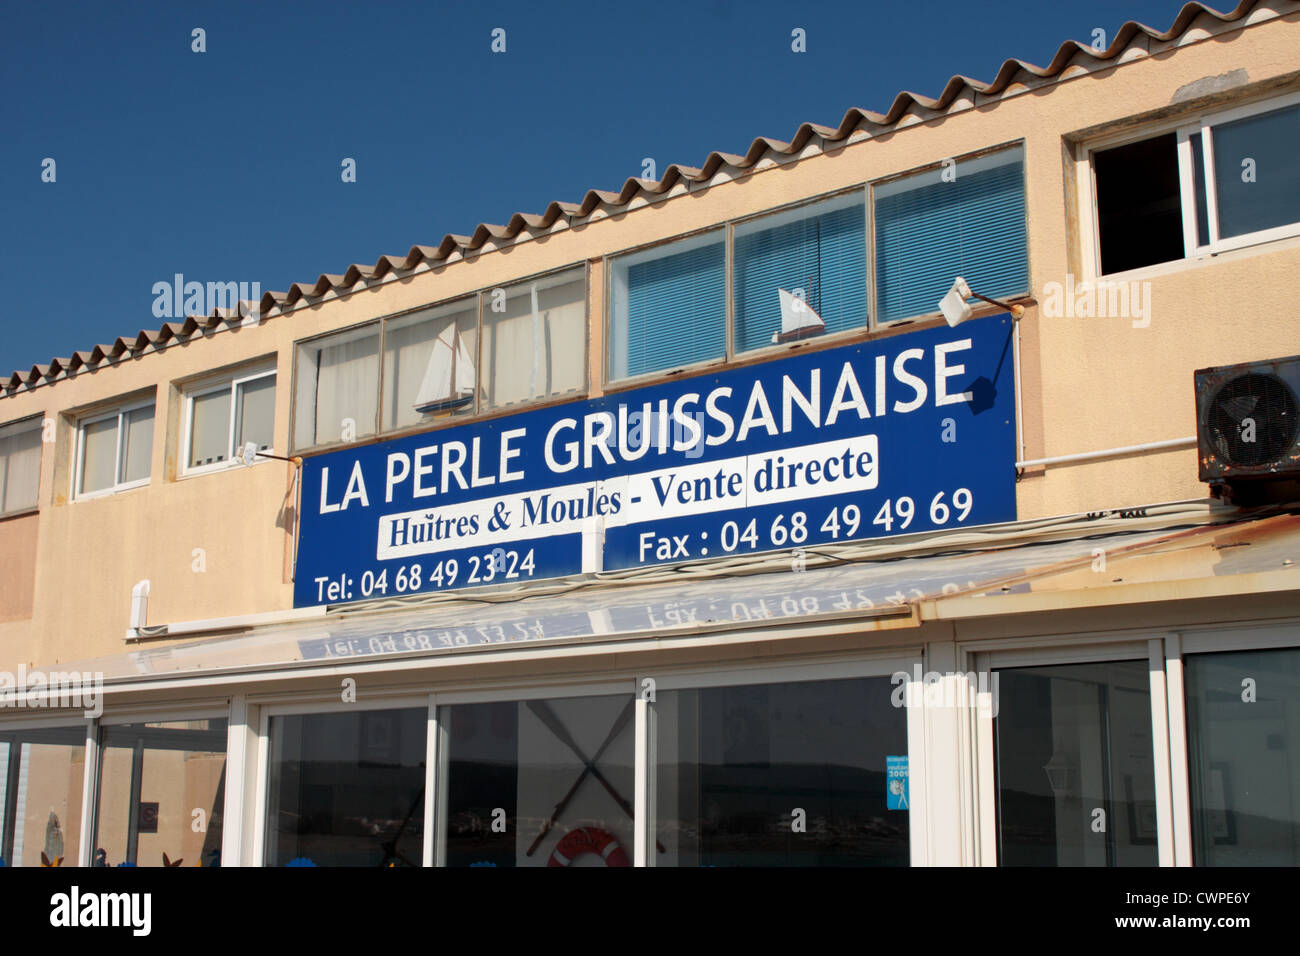 La Perle Gruissanaise restaurant and wholesale supplier of shellfish Stock Photo